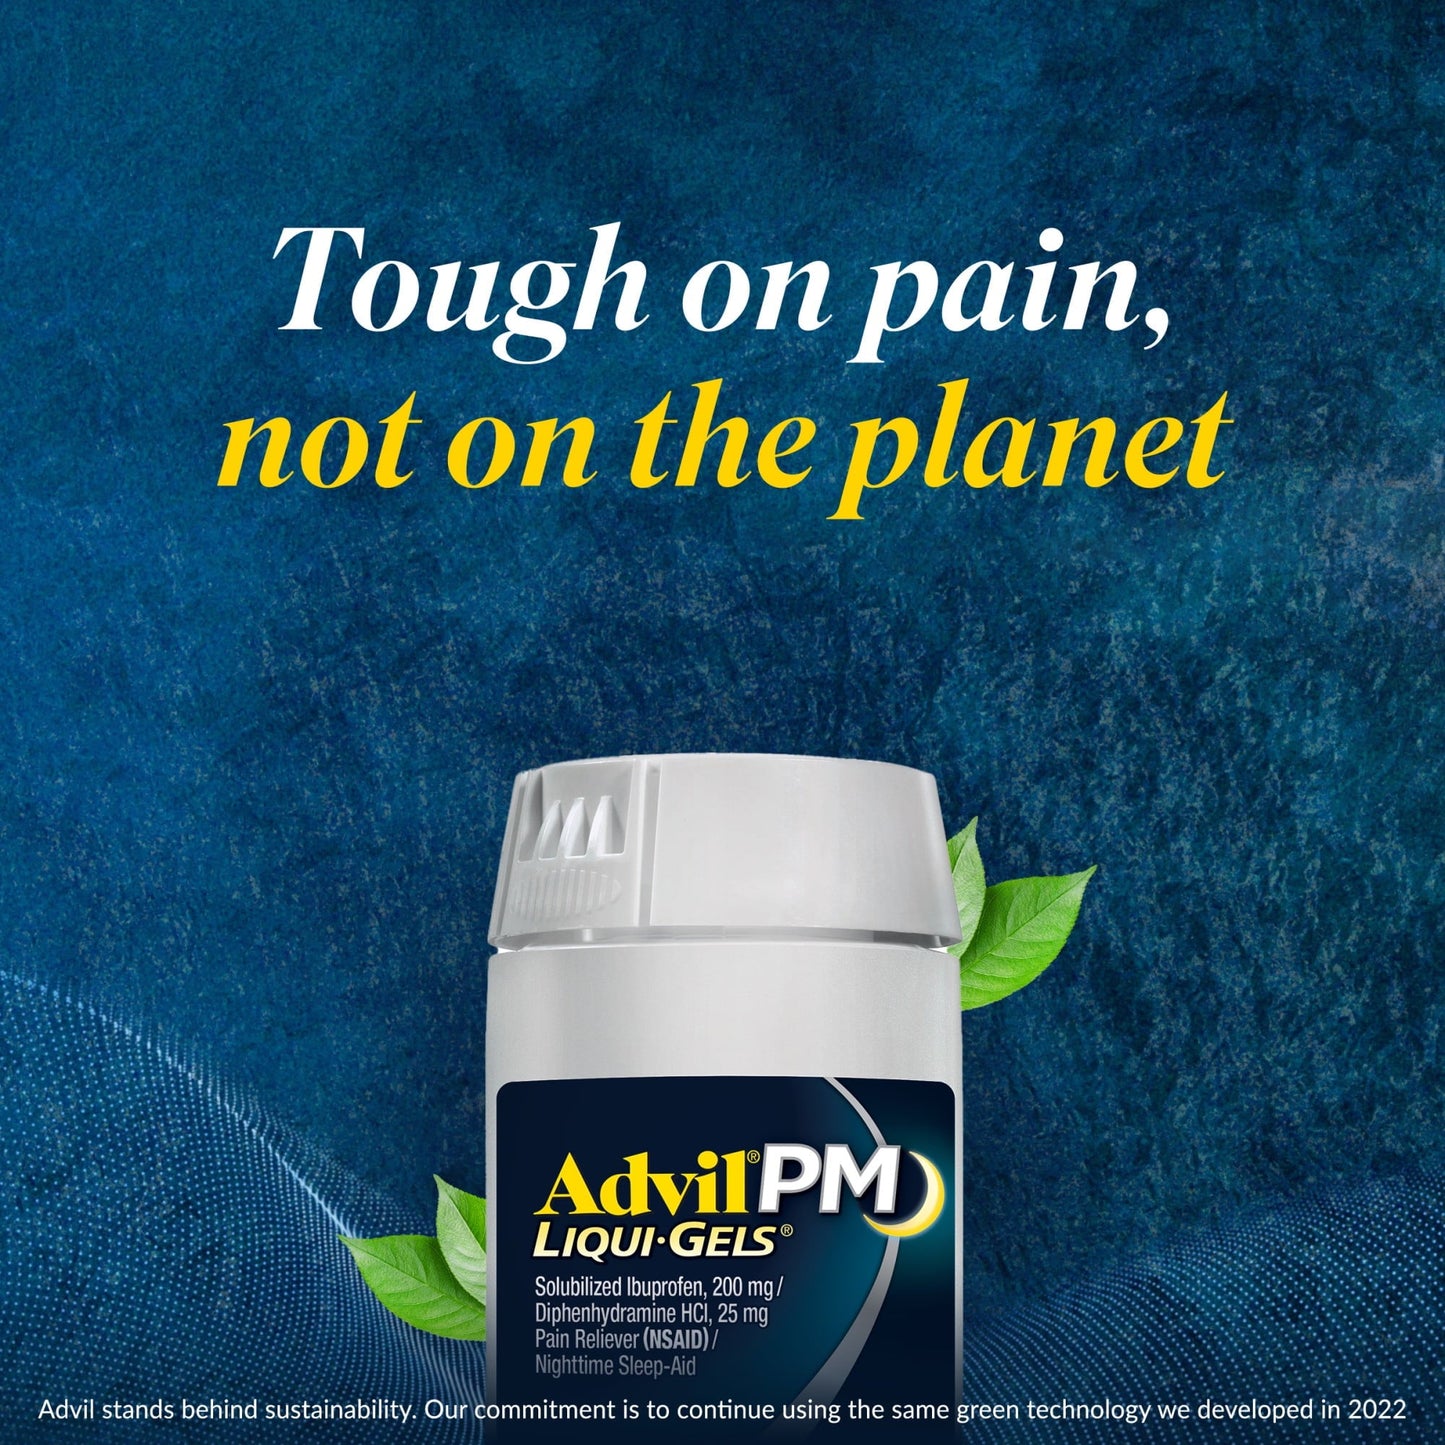 Advil PM Ibuprofen Liqui-Gels Sleep Aid Pain and Headache Reliever, 200 Mg Liquid Filled Capsules, 80 Count